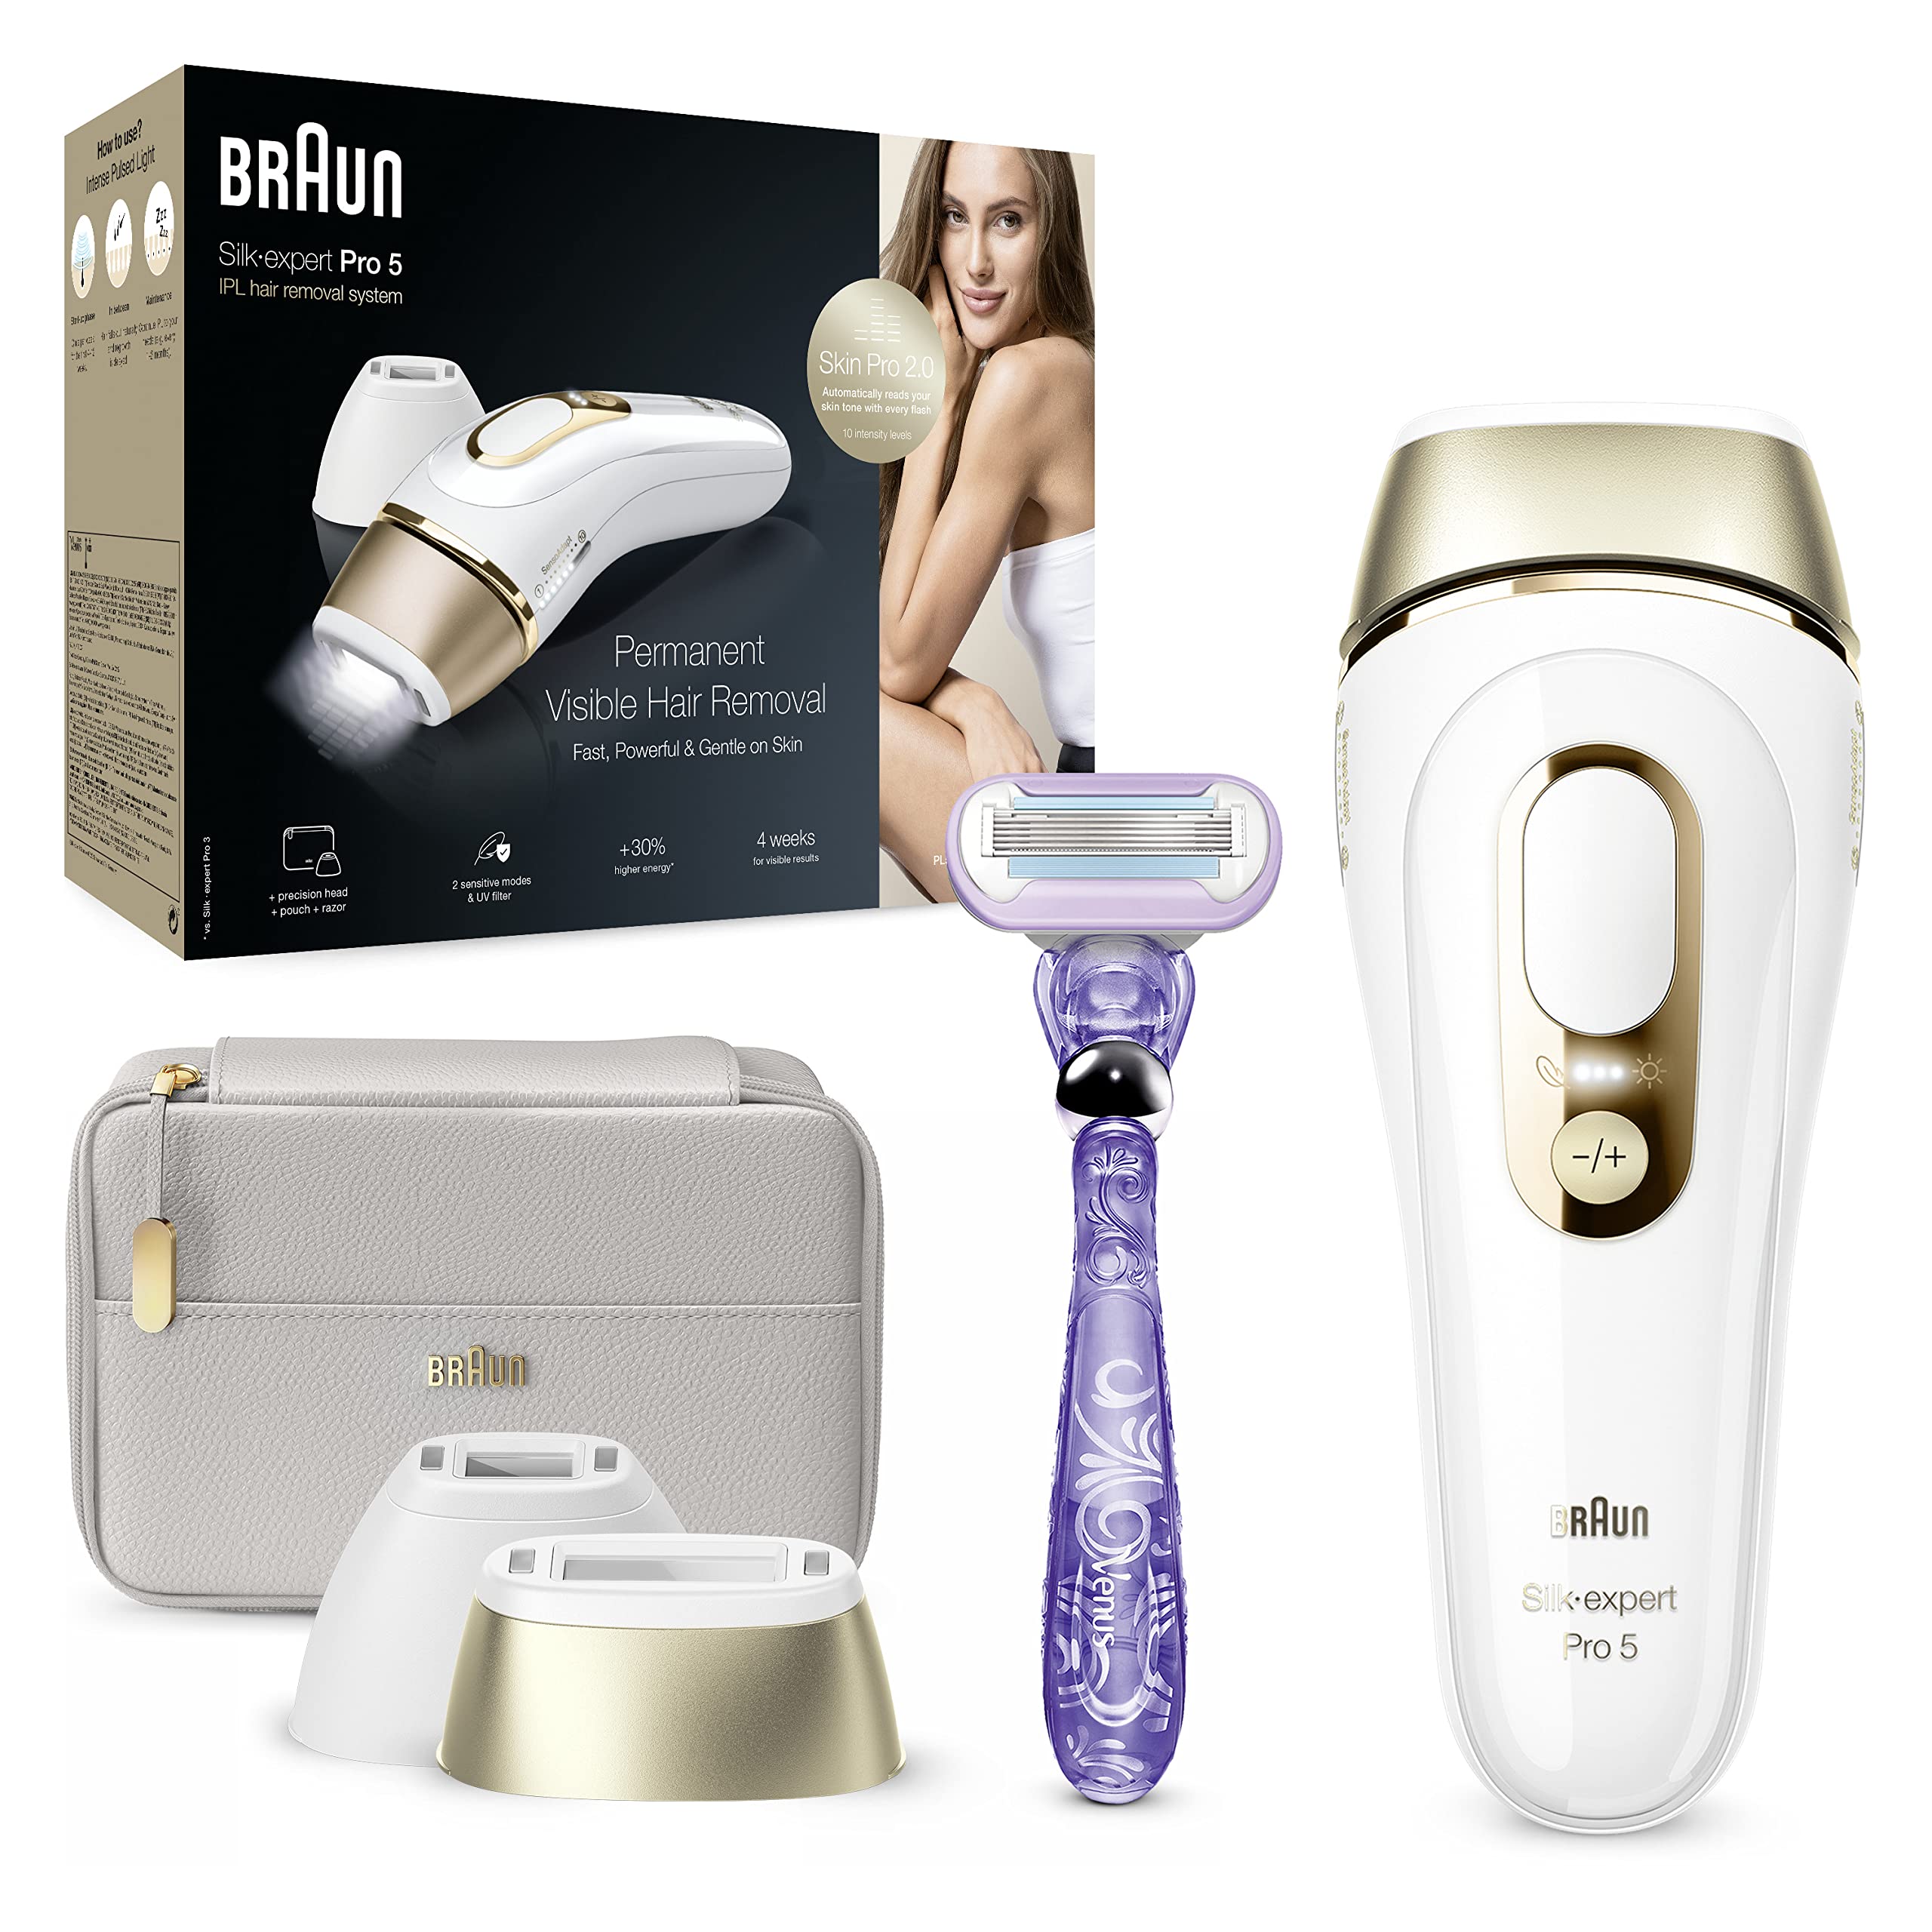 Mua Braun IPL Silk Expert Pro 5, Visible Permanent Hair Removal For Women  and Men, Venus Razor, Alternative For Laser Hair Removal, Gifts for Women,  PL5137, White/Gold, Pack of 1 trên Amazon